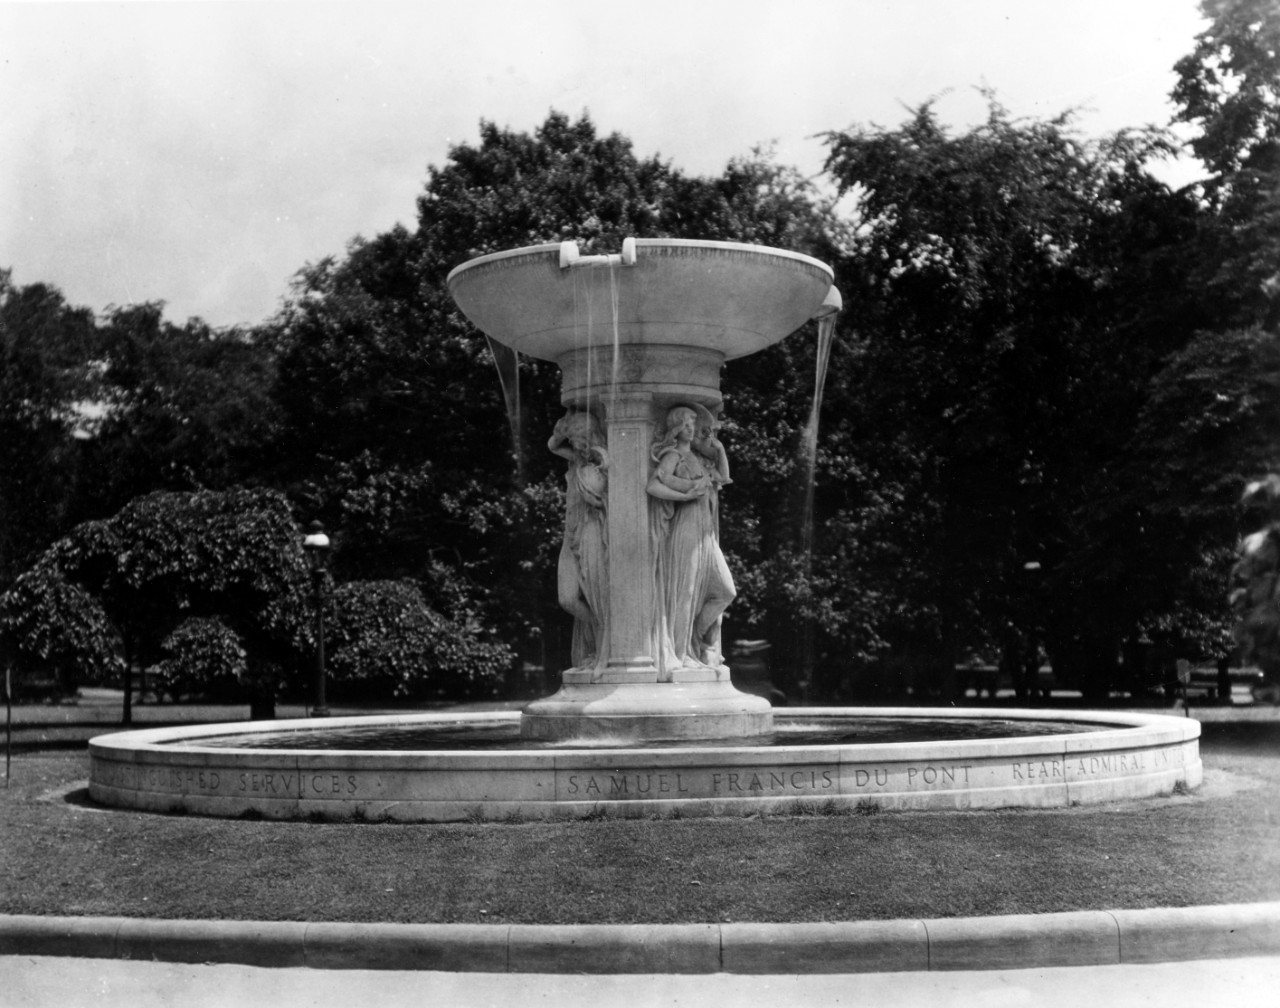 Dupont Circle Statue, Washington, D.C. Monument to Rear Admiral Francis Dupont, Civil War Admiral